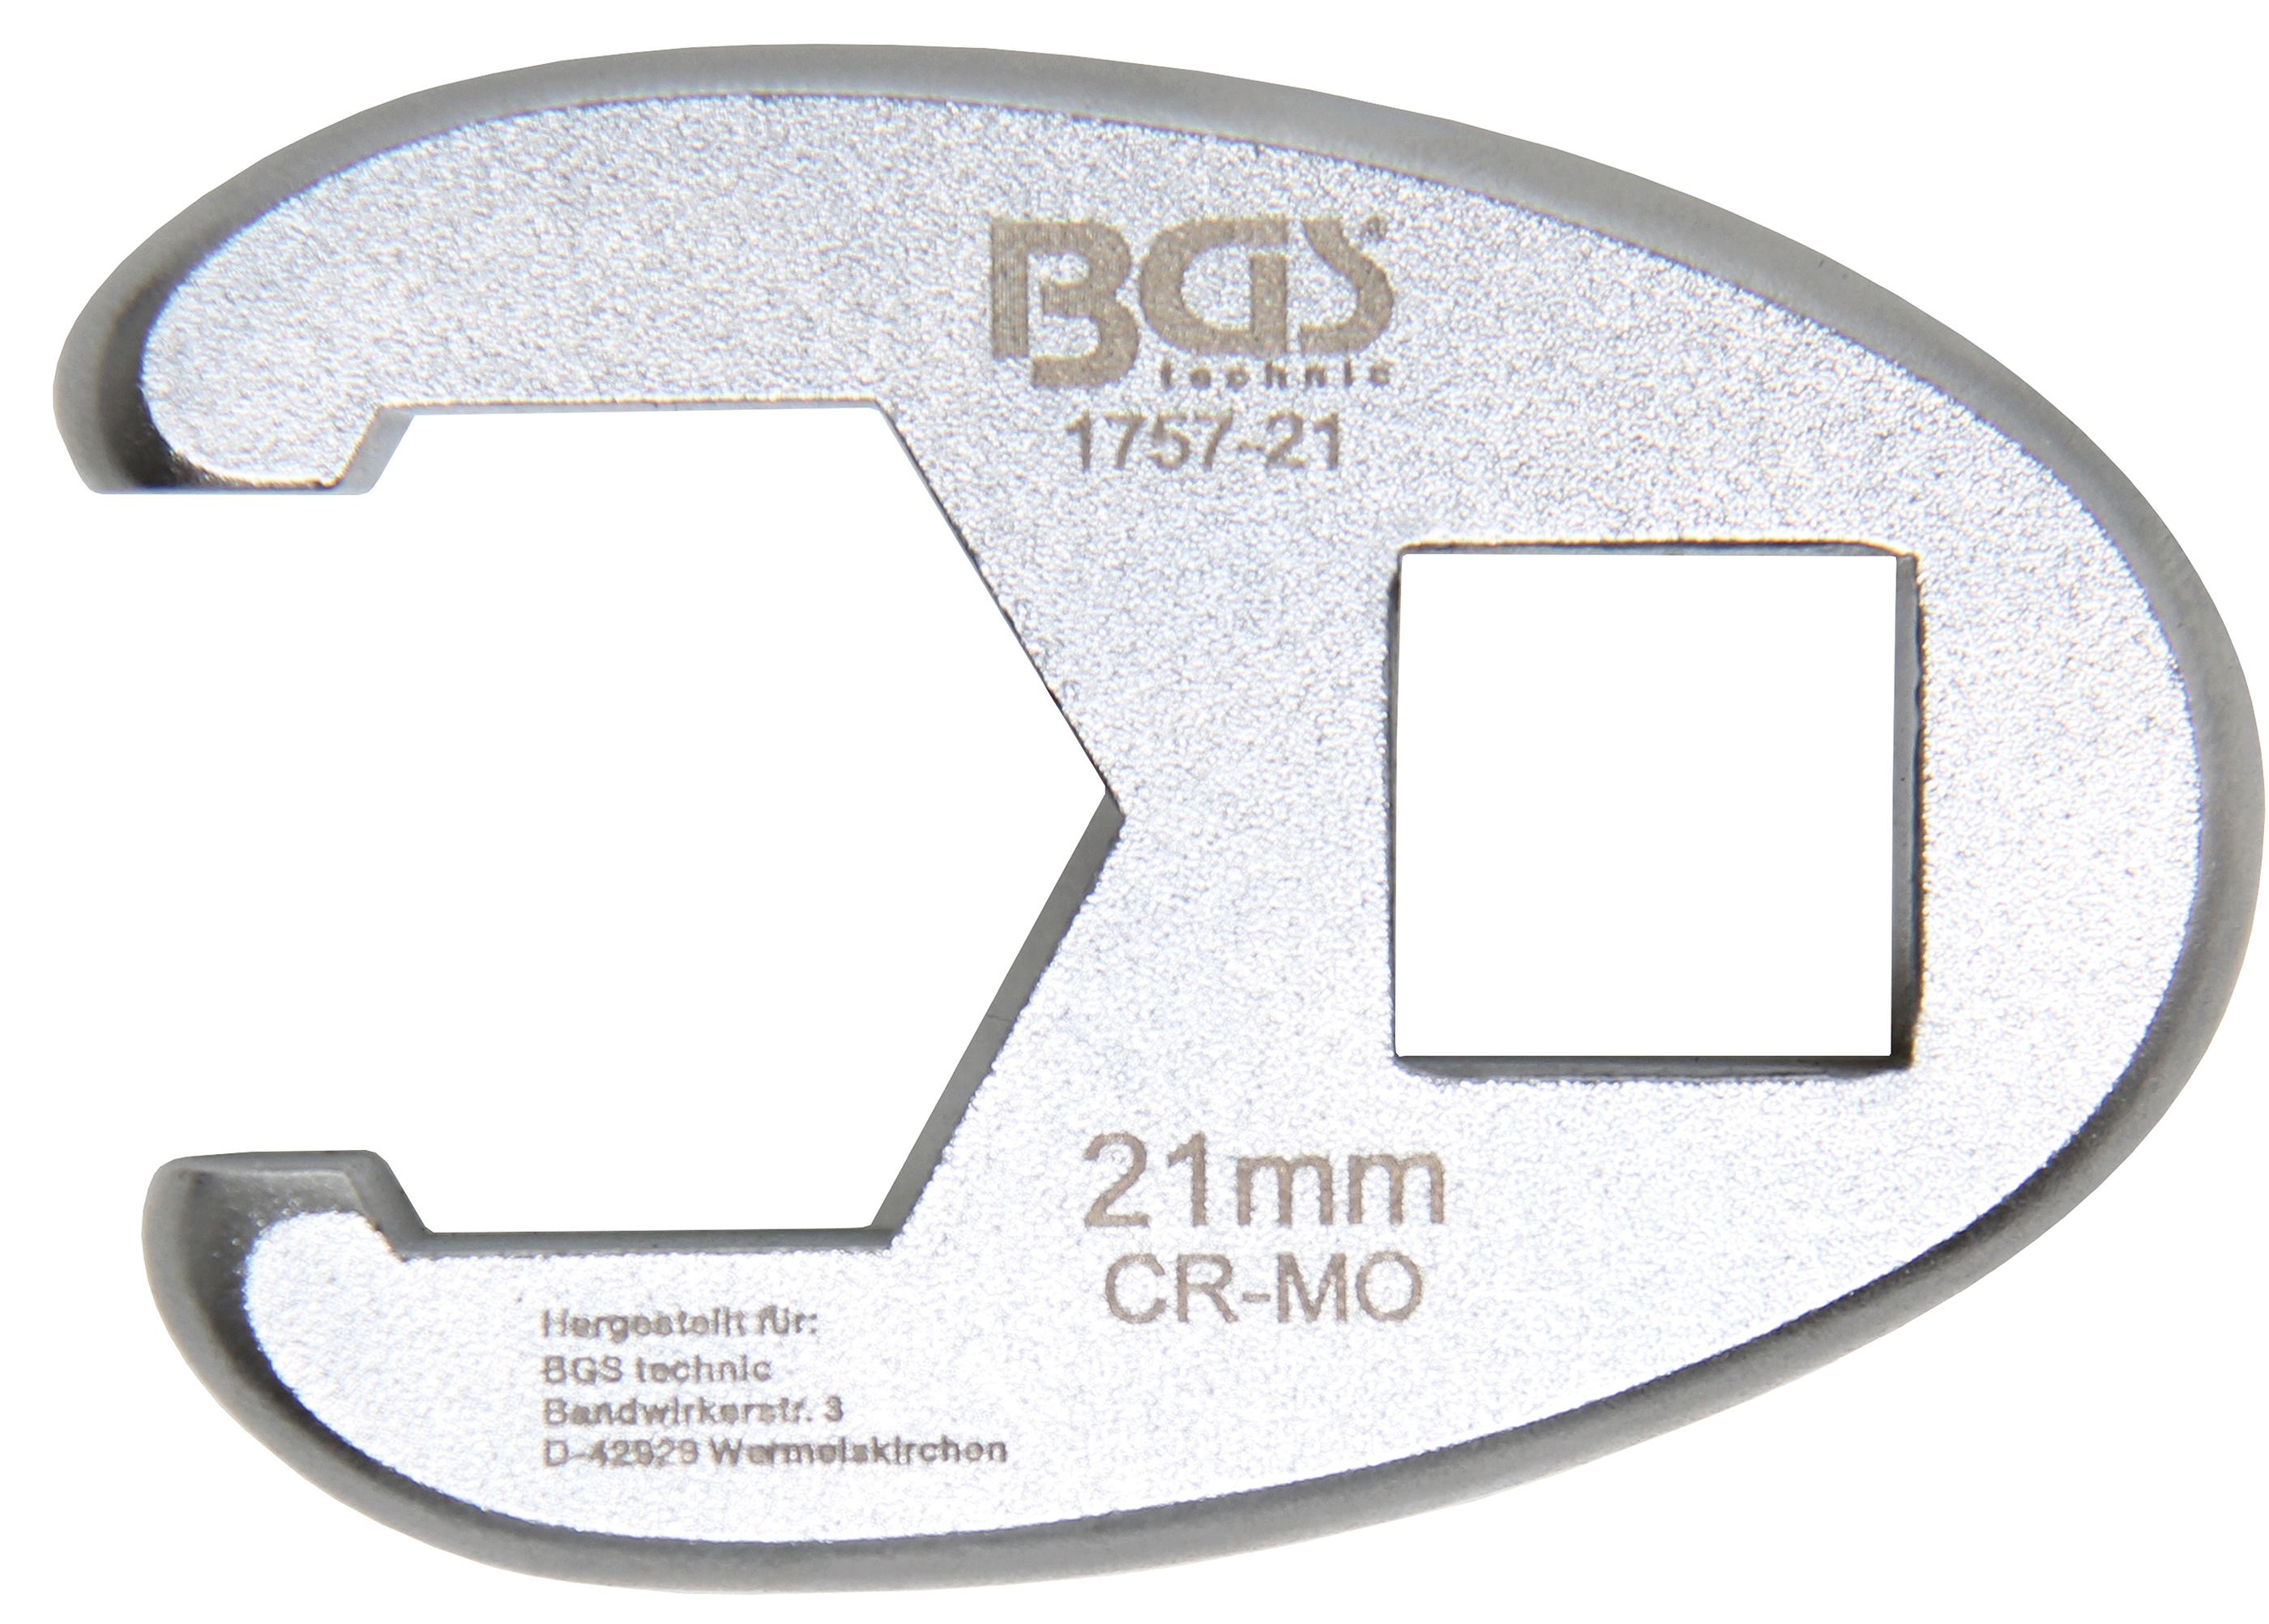 BGS 1757-21  Cheie speciala conducte/alte utilizari,21 mm, 1/2''